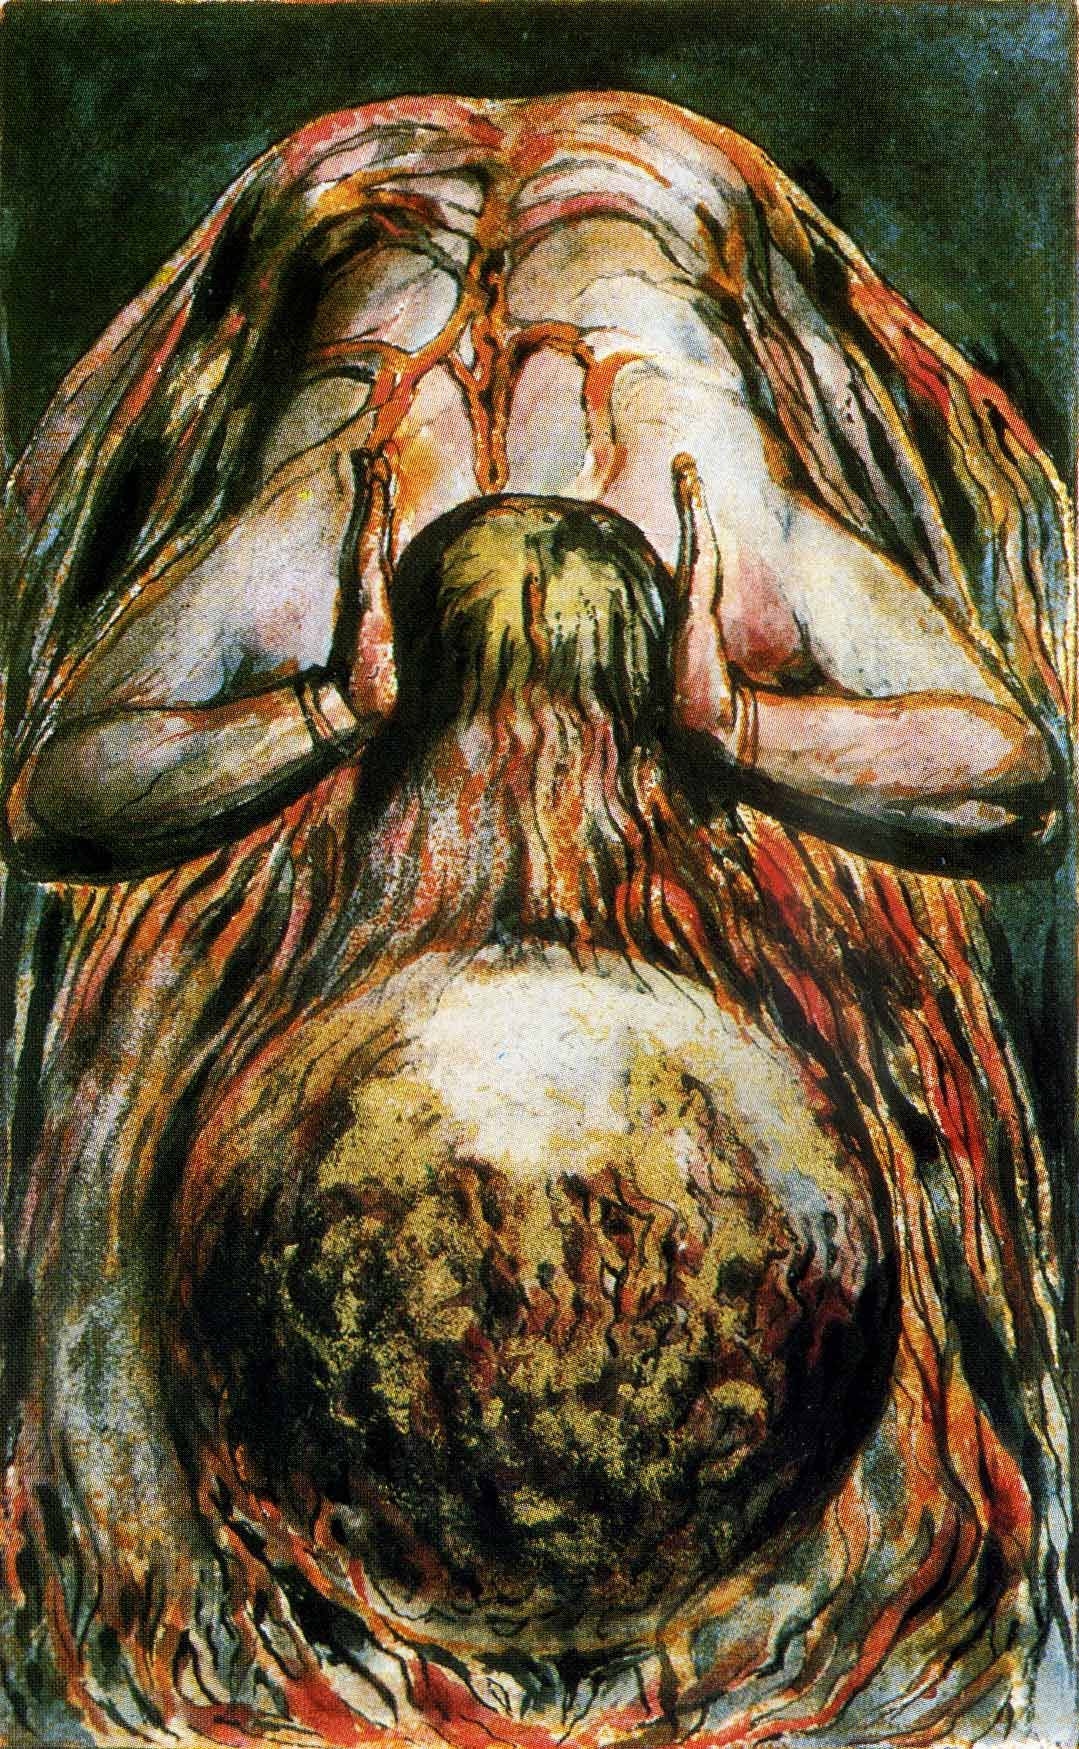 Artwork by William Blake